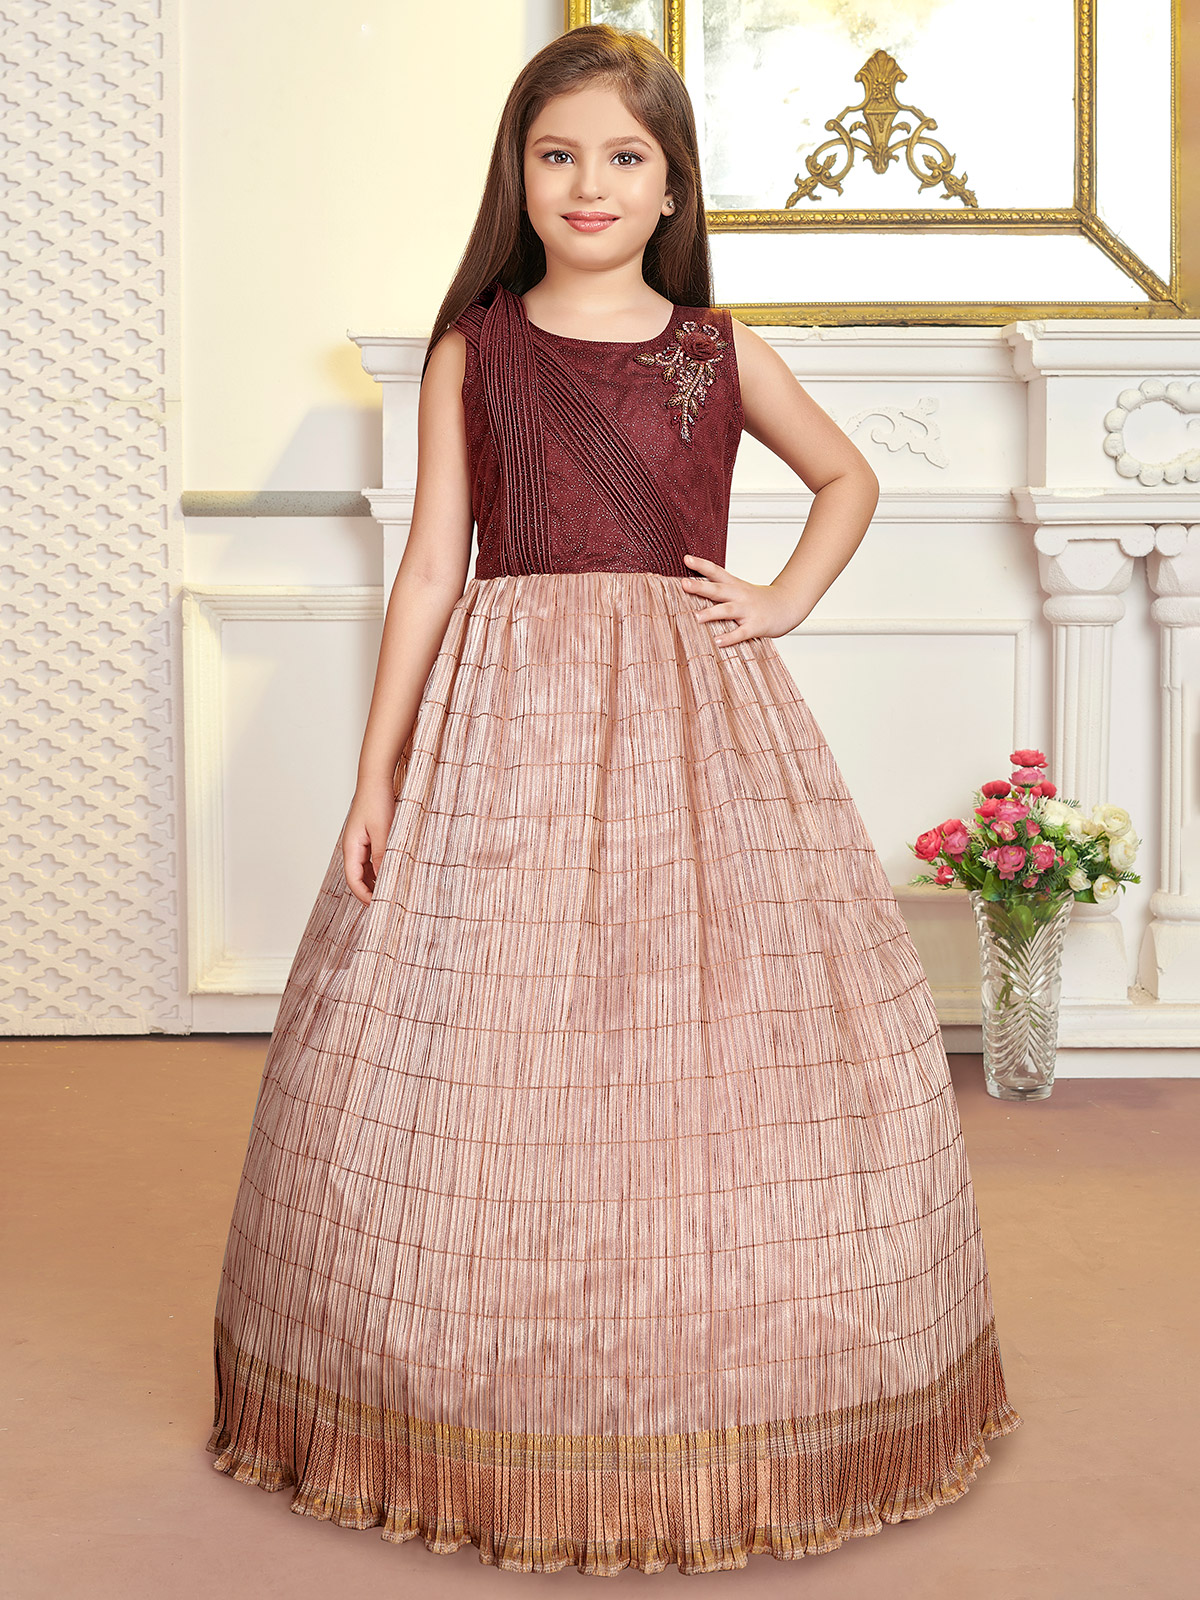 Buy Bridezilla Fab Girl's Readymade Ethnic Wear Crop Top With Full Length  Skirt | Lehenga Choli For Kids Girls (2-3 Years, Blue) at Amazon.in